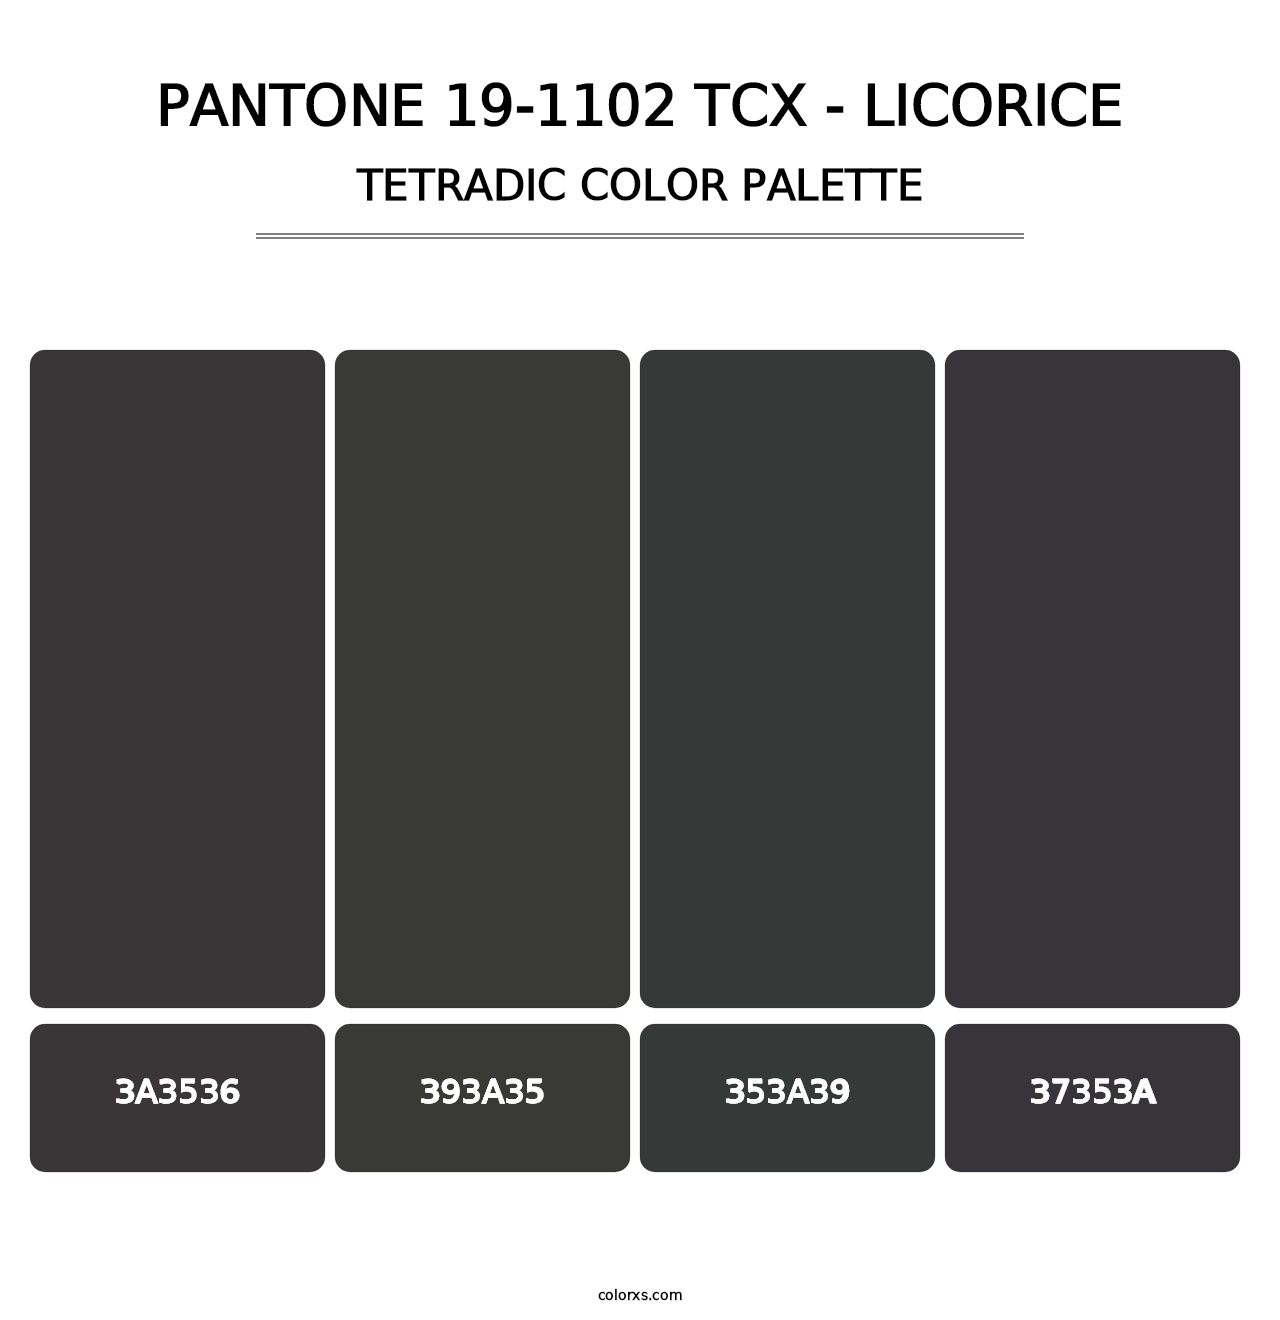 PANTONE 19-1102 TCX - Licorice - Tetradic Color Palette